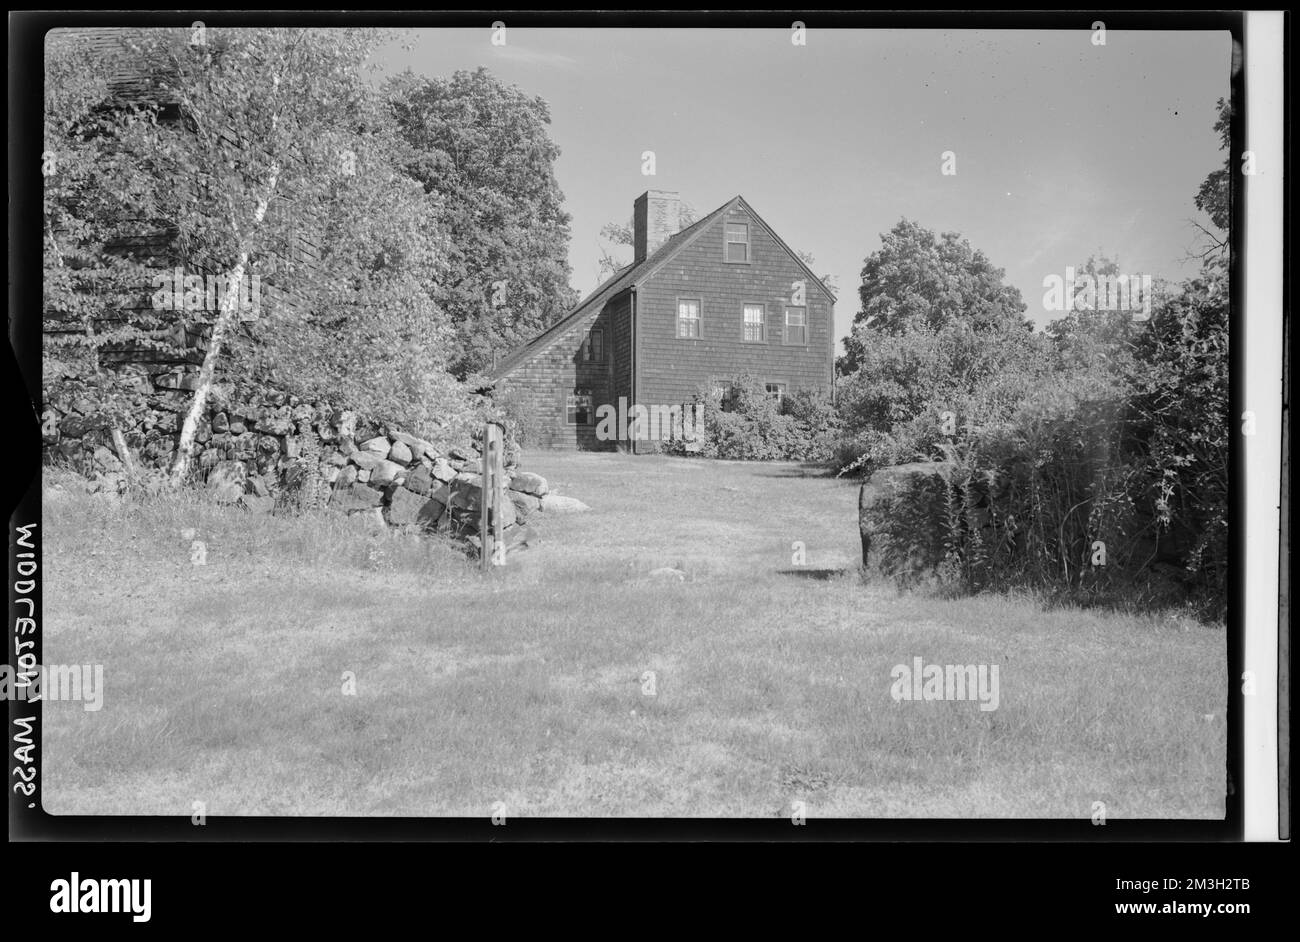 Middleton, house , Architecture, Dwellings, Stone walls, Gates. Samuel Chamberlain Photograph Negatives Collection Stock Photo